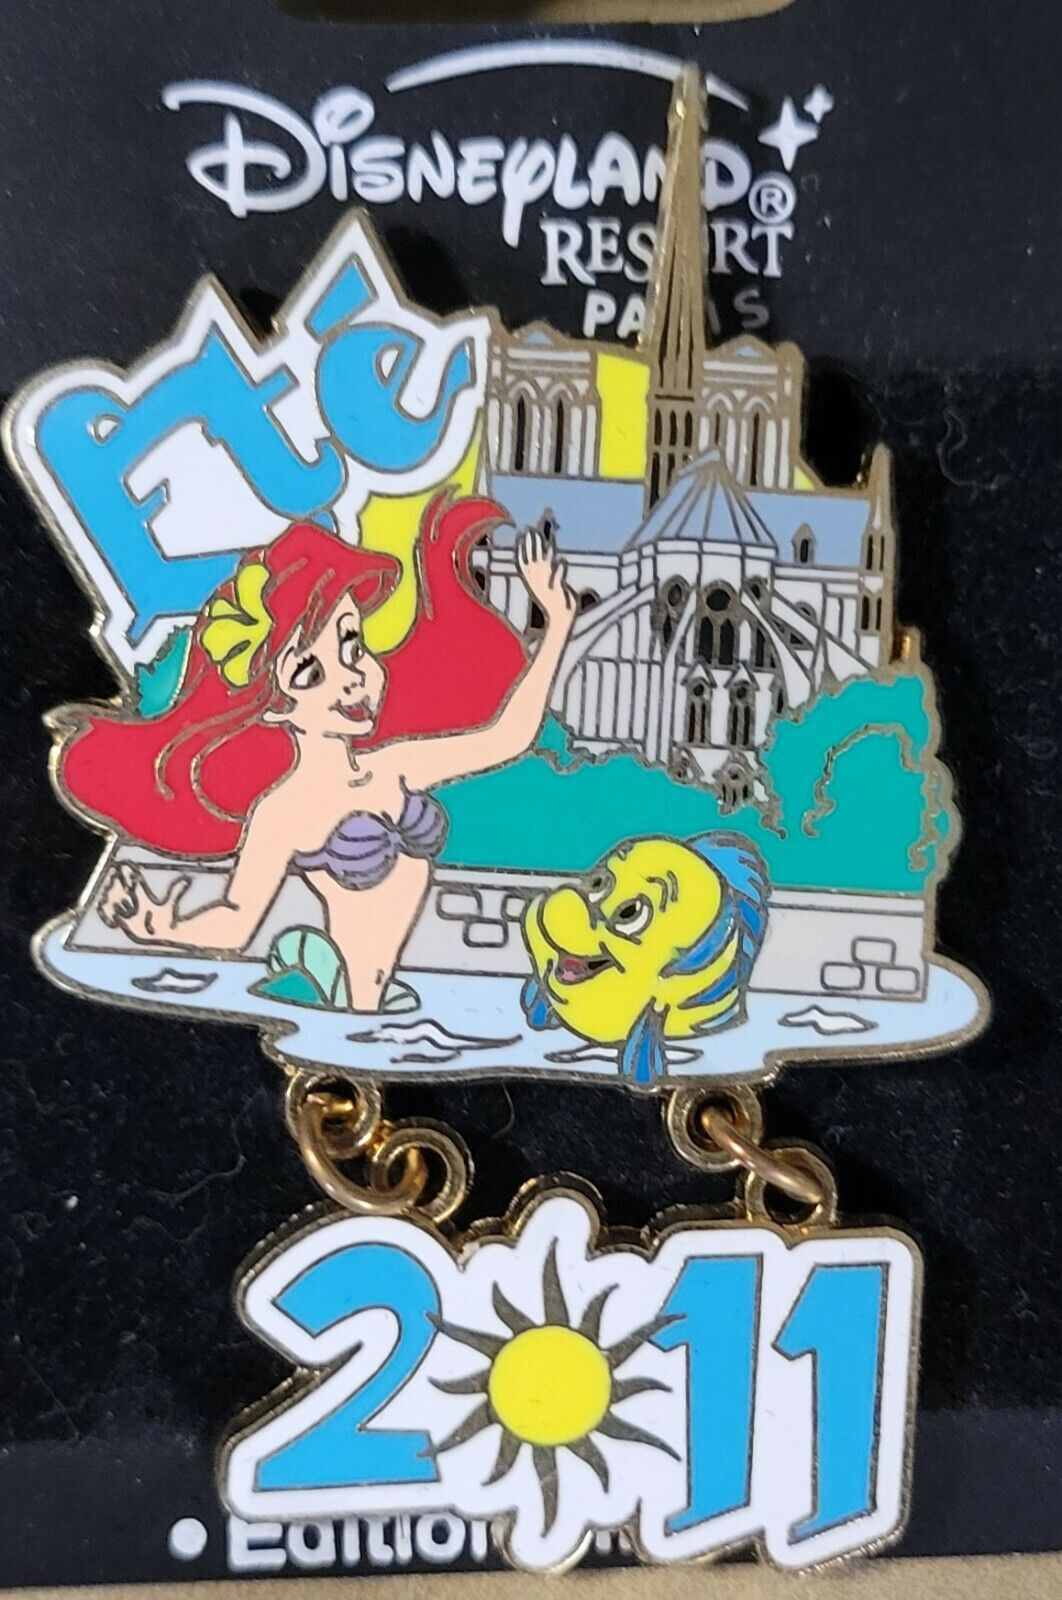 Disney Disneyland Paris Dlrp Ete Summer Ariel Flounder Little Mermaid Le 600 Pin